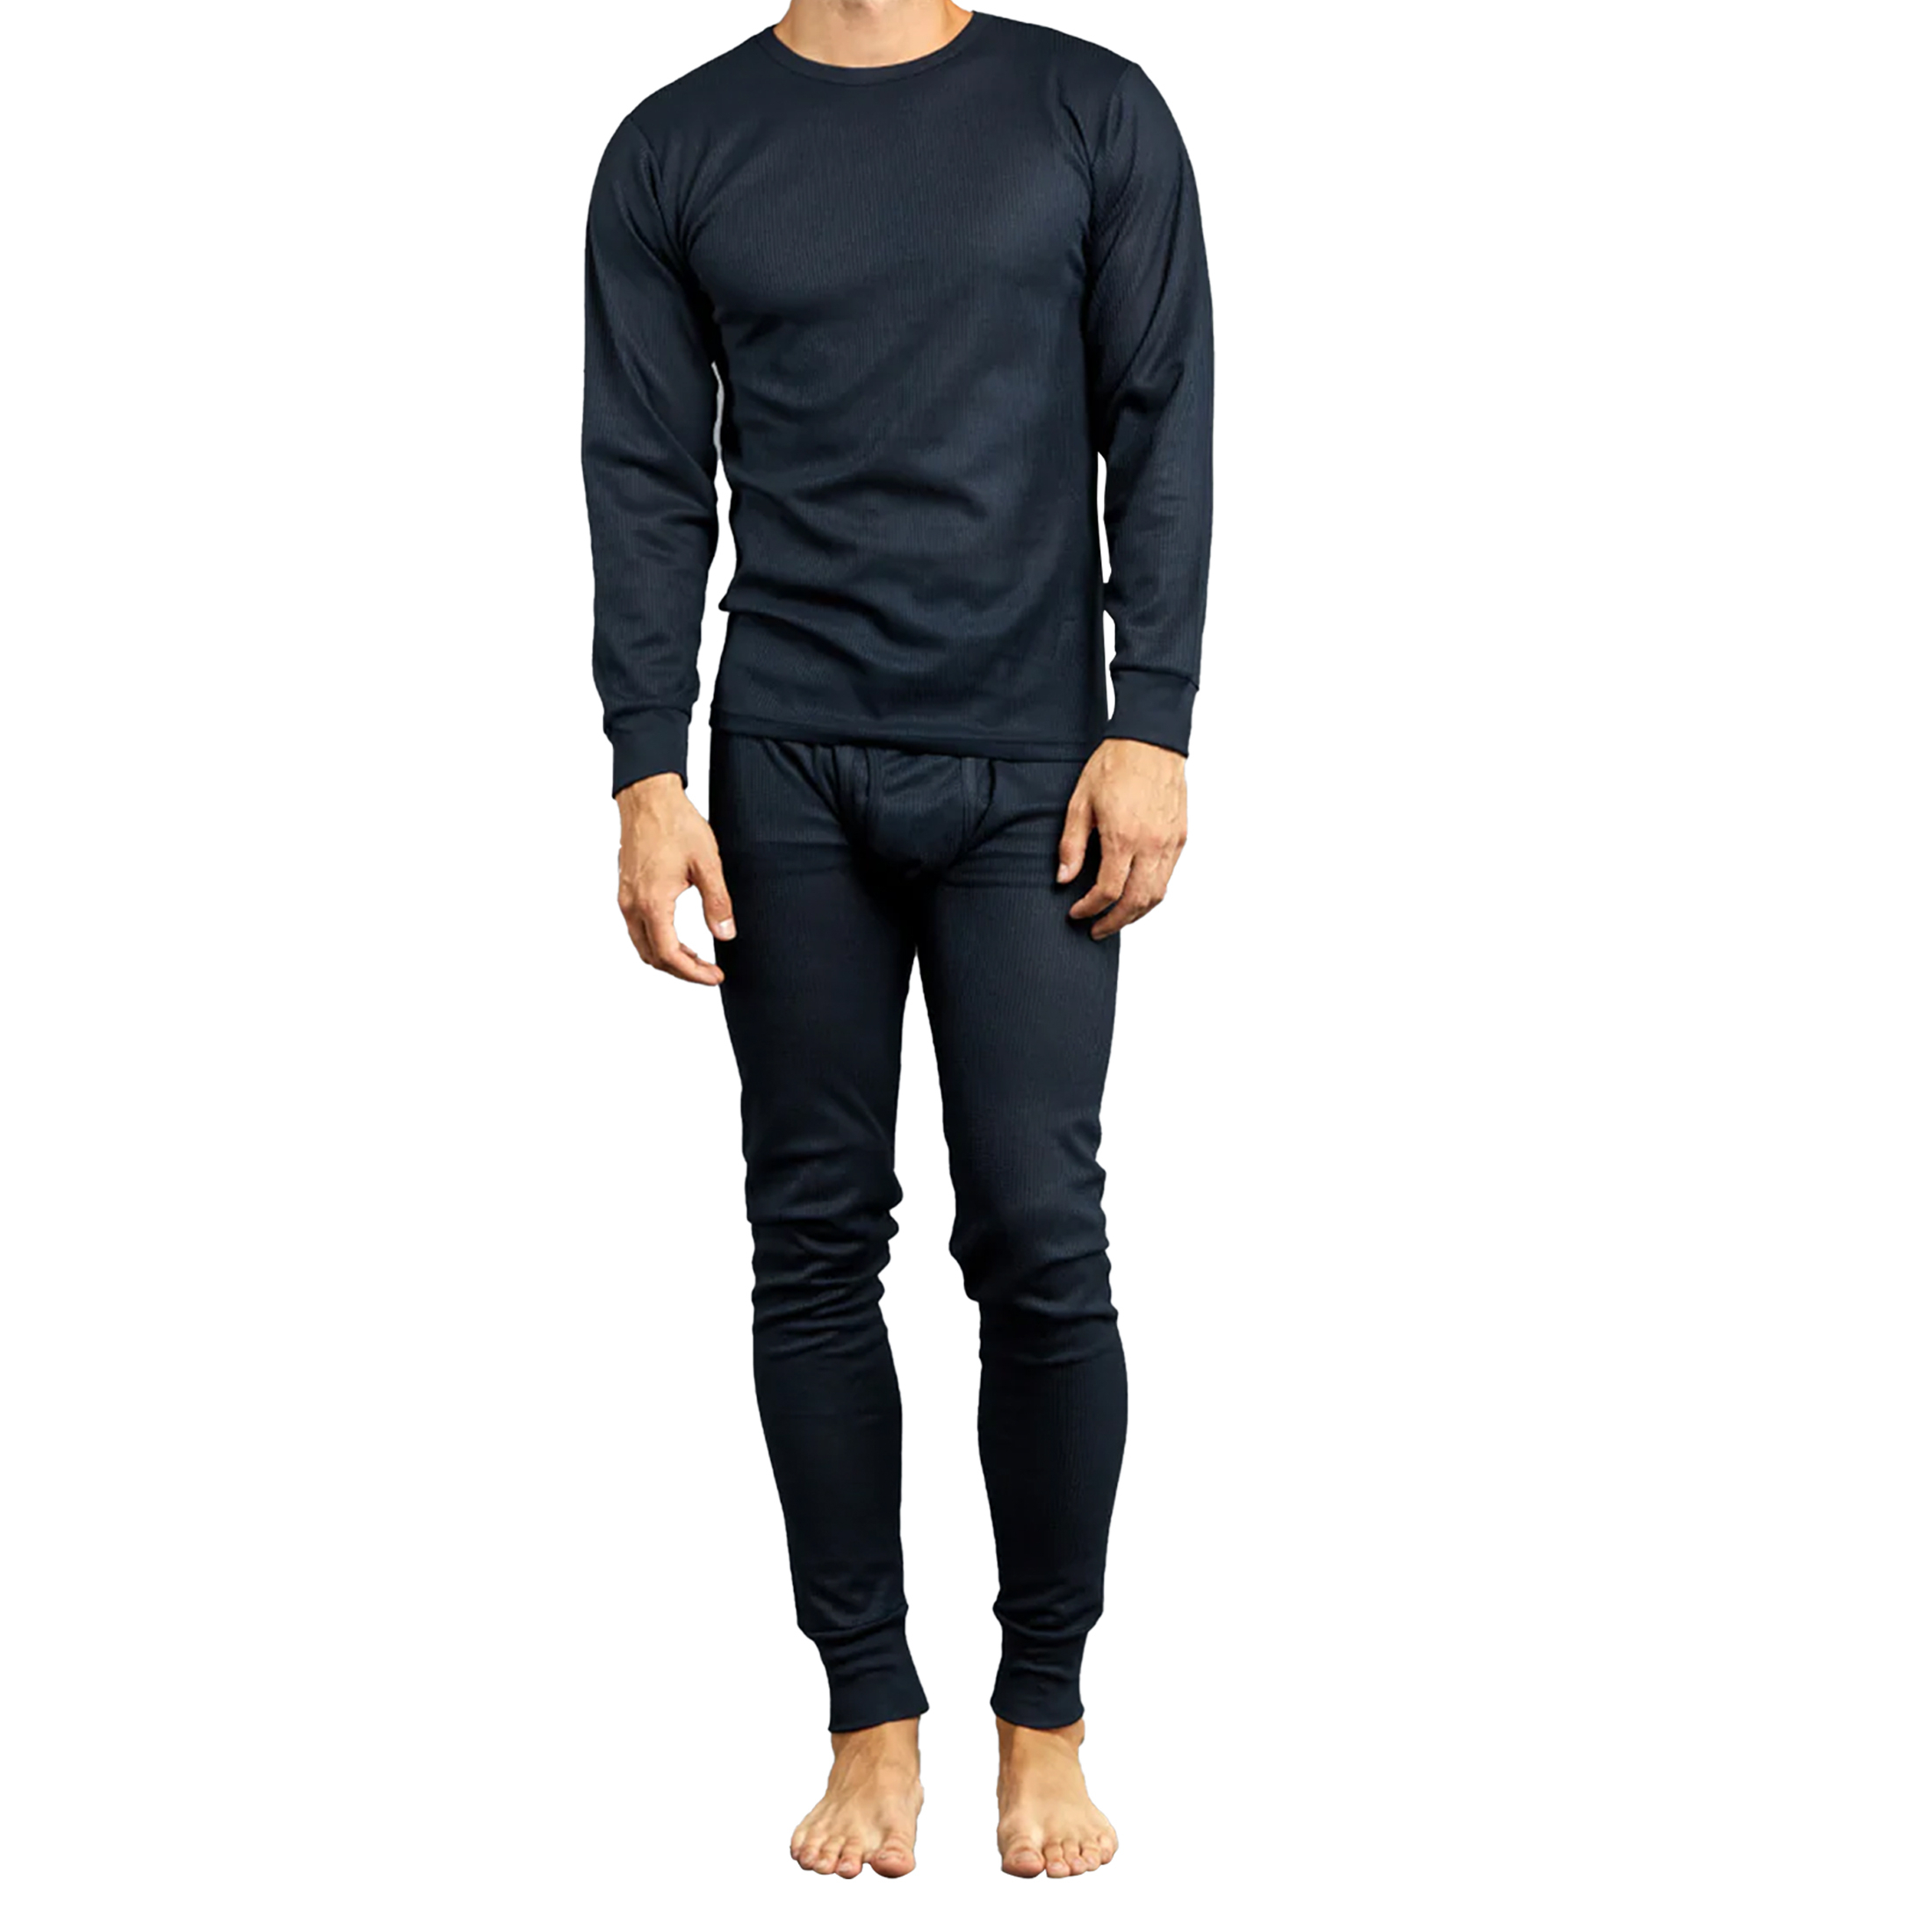 2-Piece: Men's Moisture Wicking Long Johns Base Layer Thermal Underwear Set (Top & Bottom) - Navy, X-Large